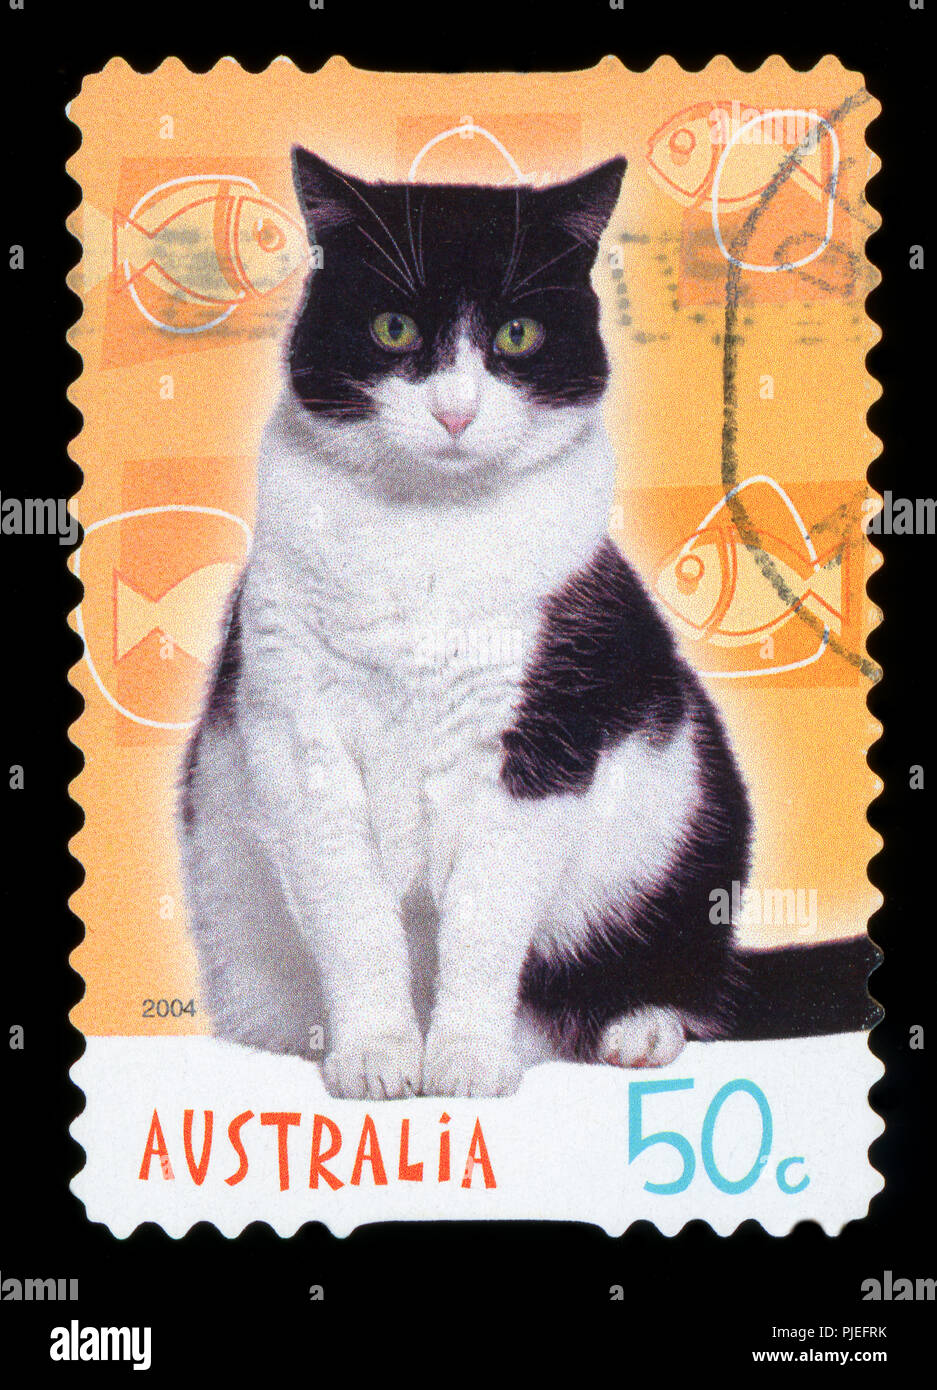 AUSTRALIA - CIRCA 2004: A stamp printed in australia shows a cat, circa 2004 Stock Photo